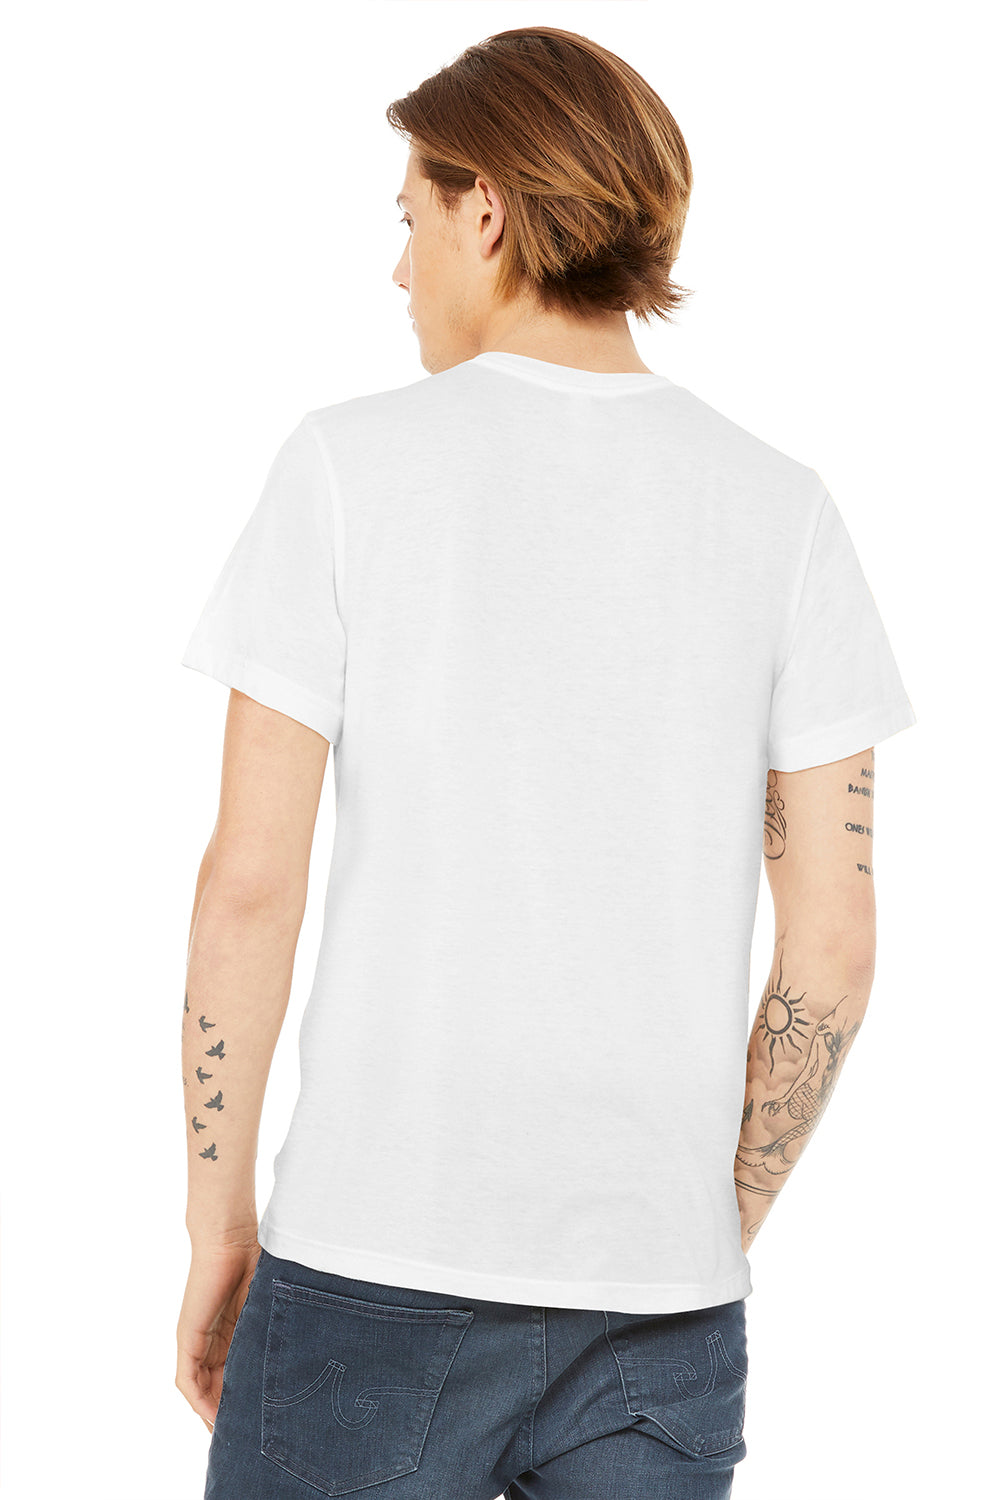 Bella + Canvas BC3650/3650 Mens Short Sleeve Crewneck T-Shirt White Model Back